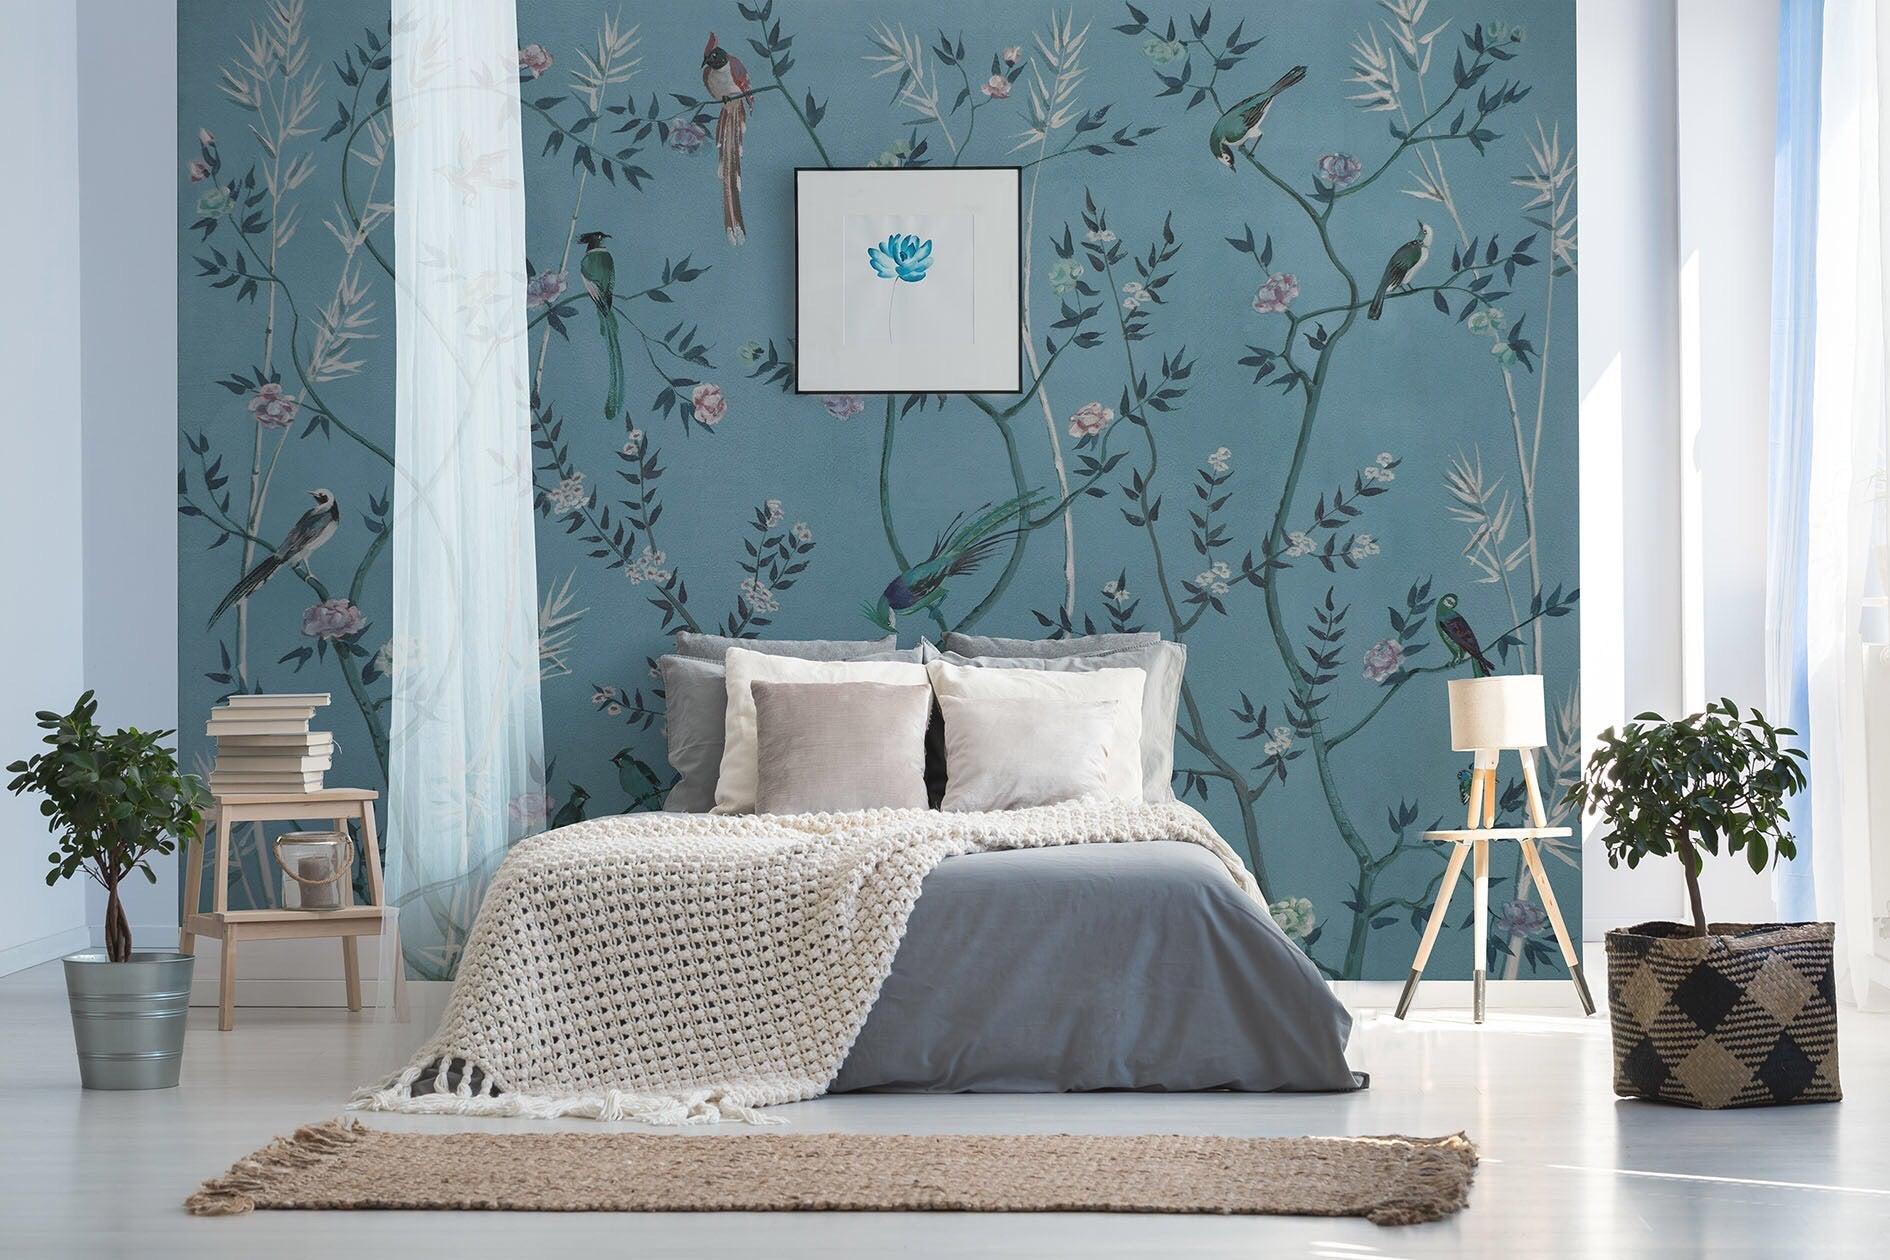 Turquoise Watercolor Leafs Wallpaper, Soft and Elegant Wall Murals -  SocialPrint